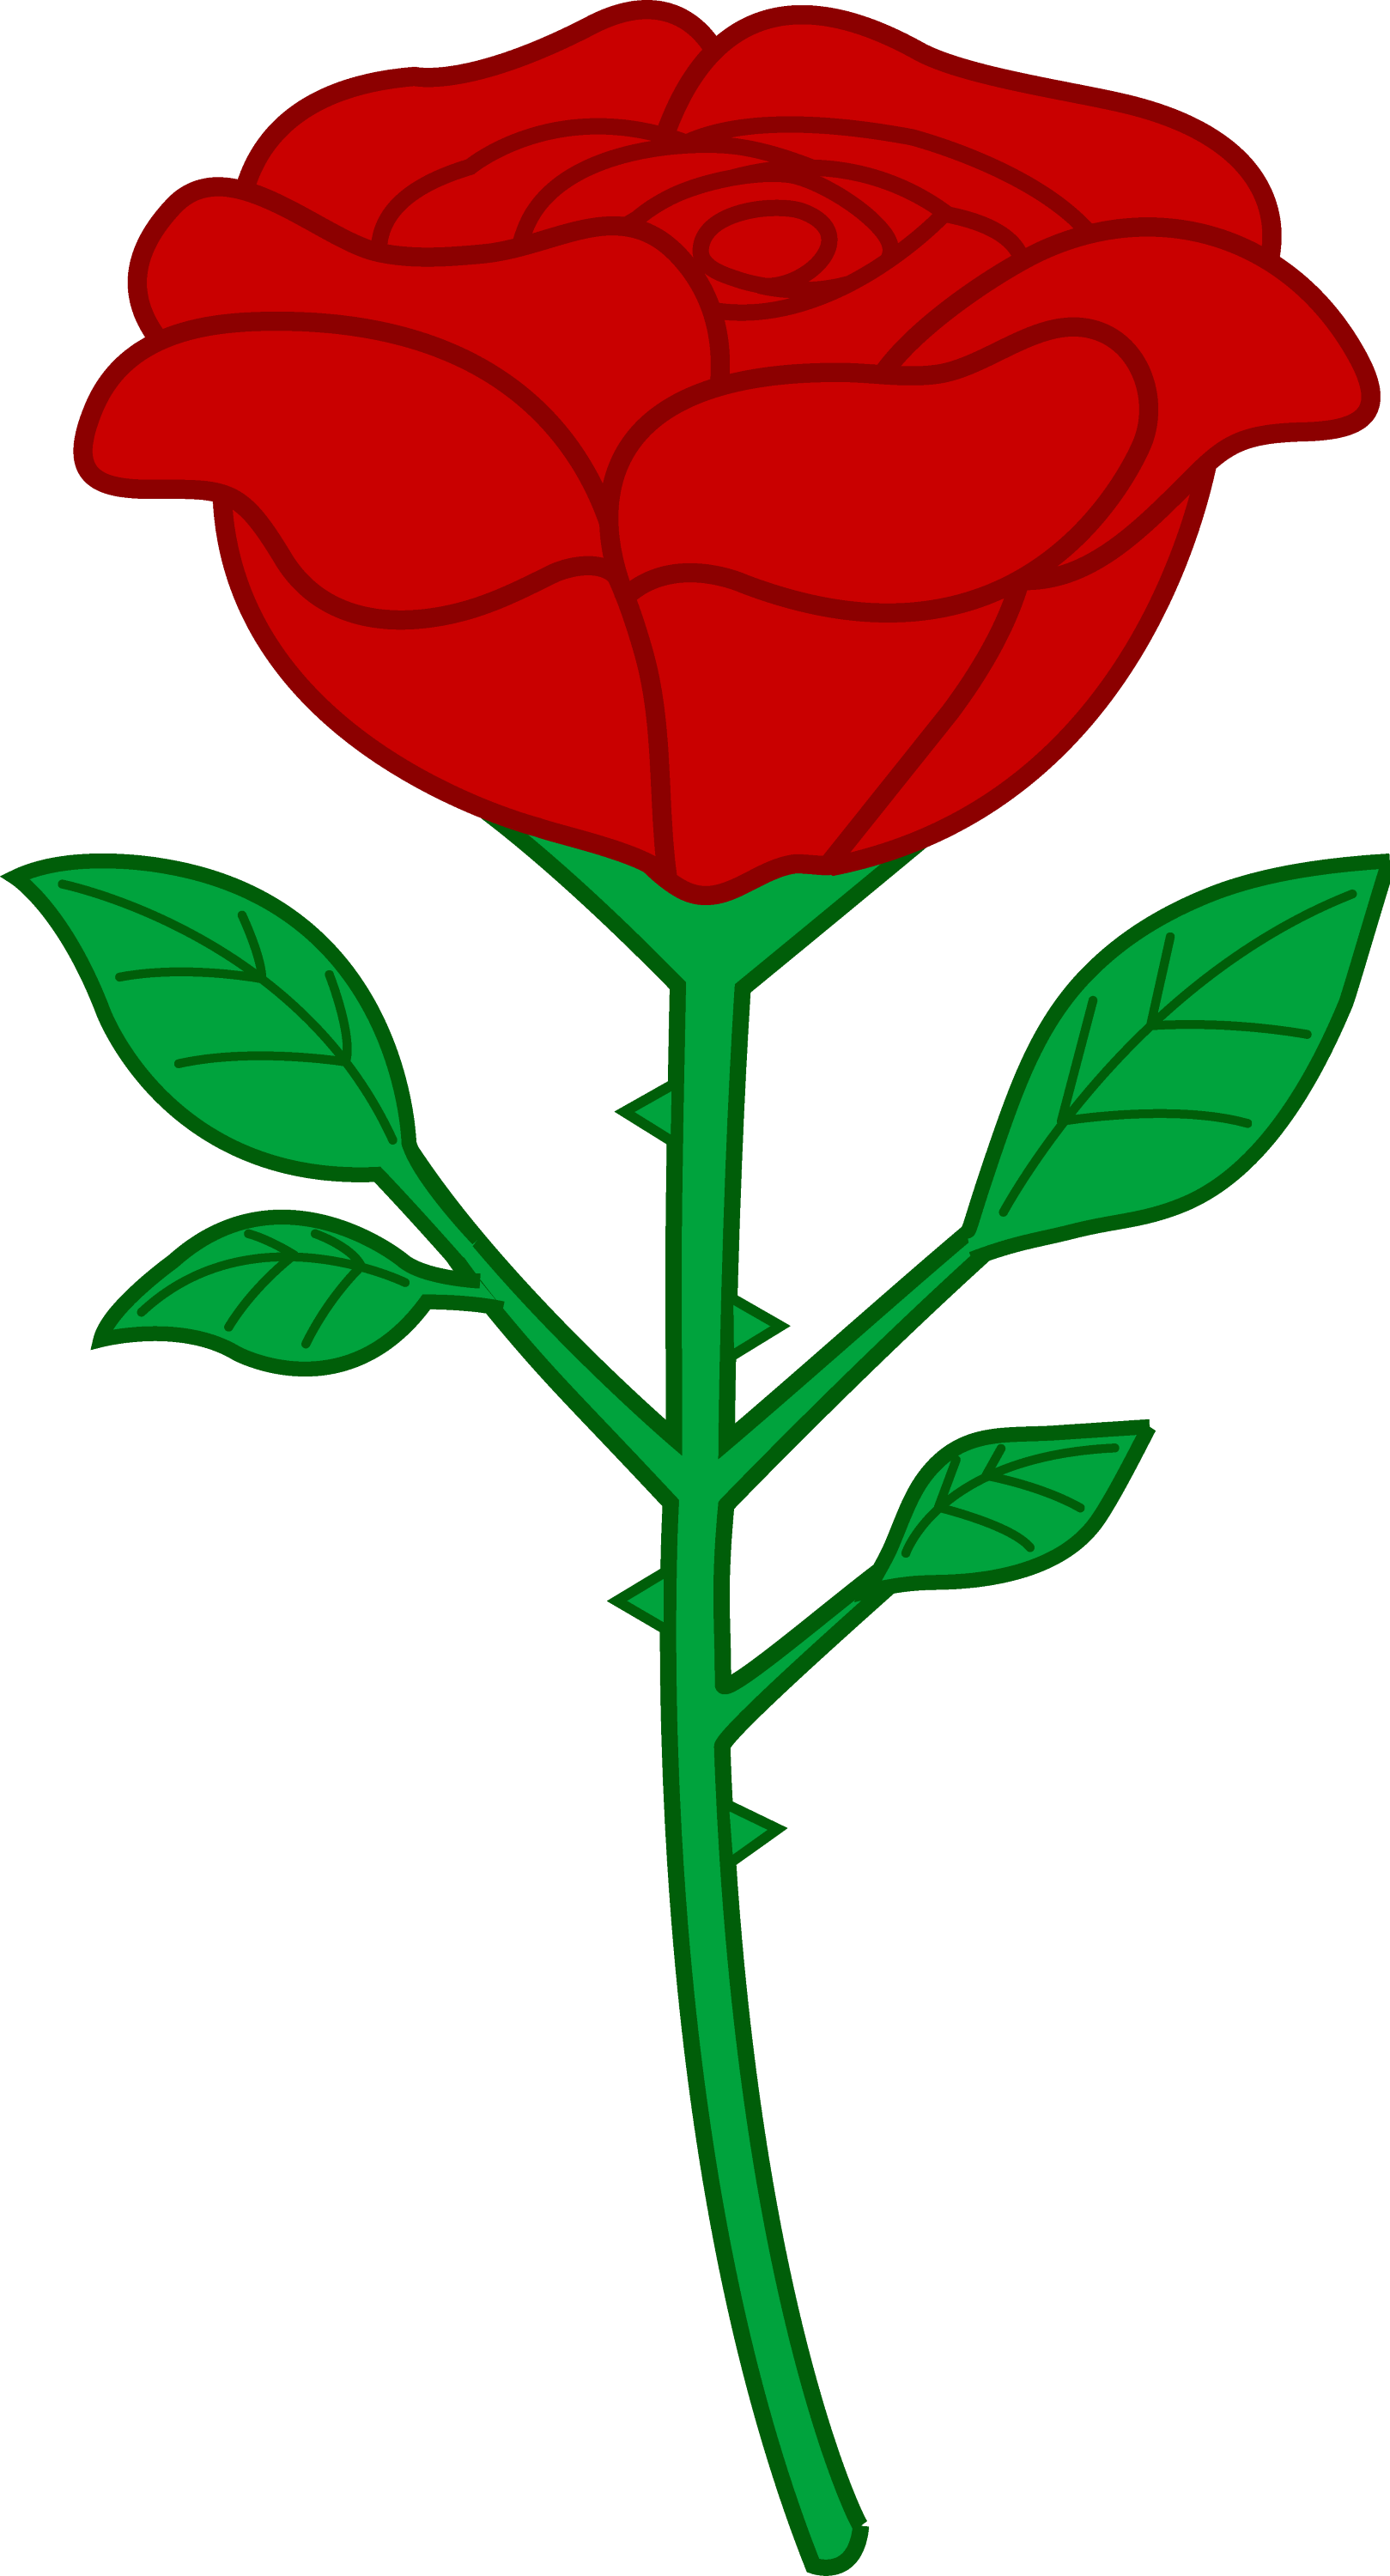 single rose clipart - photo #26